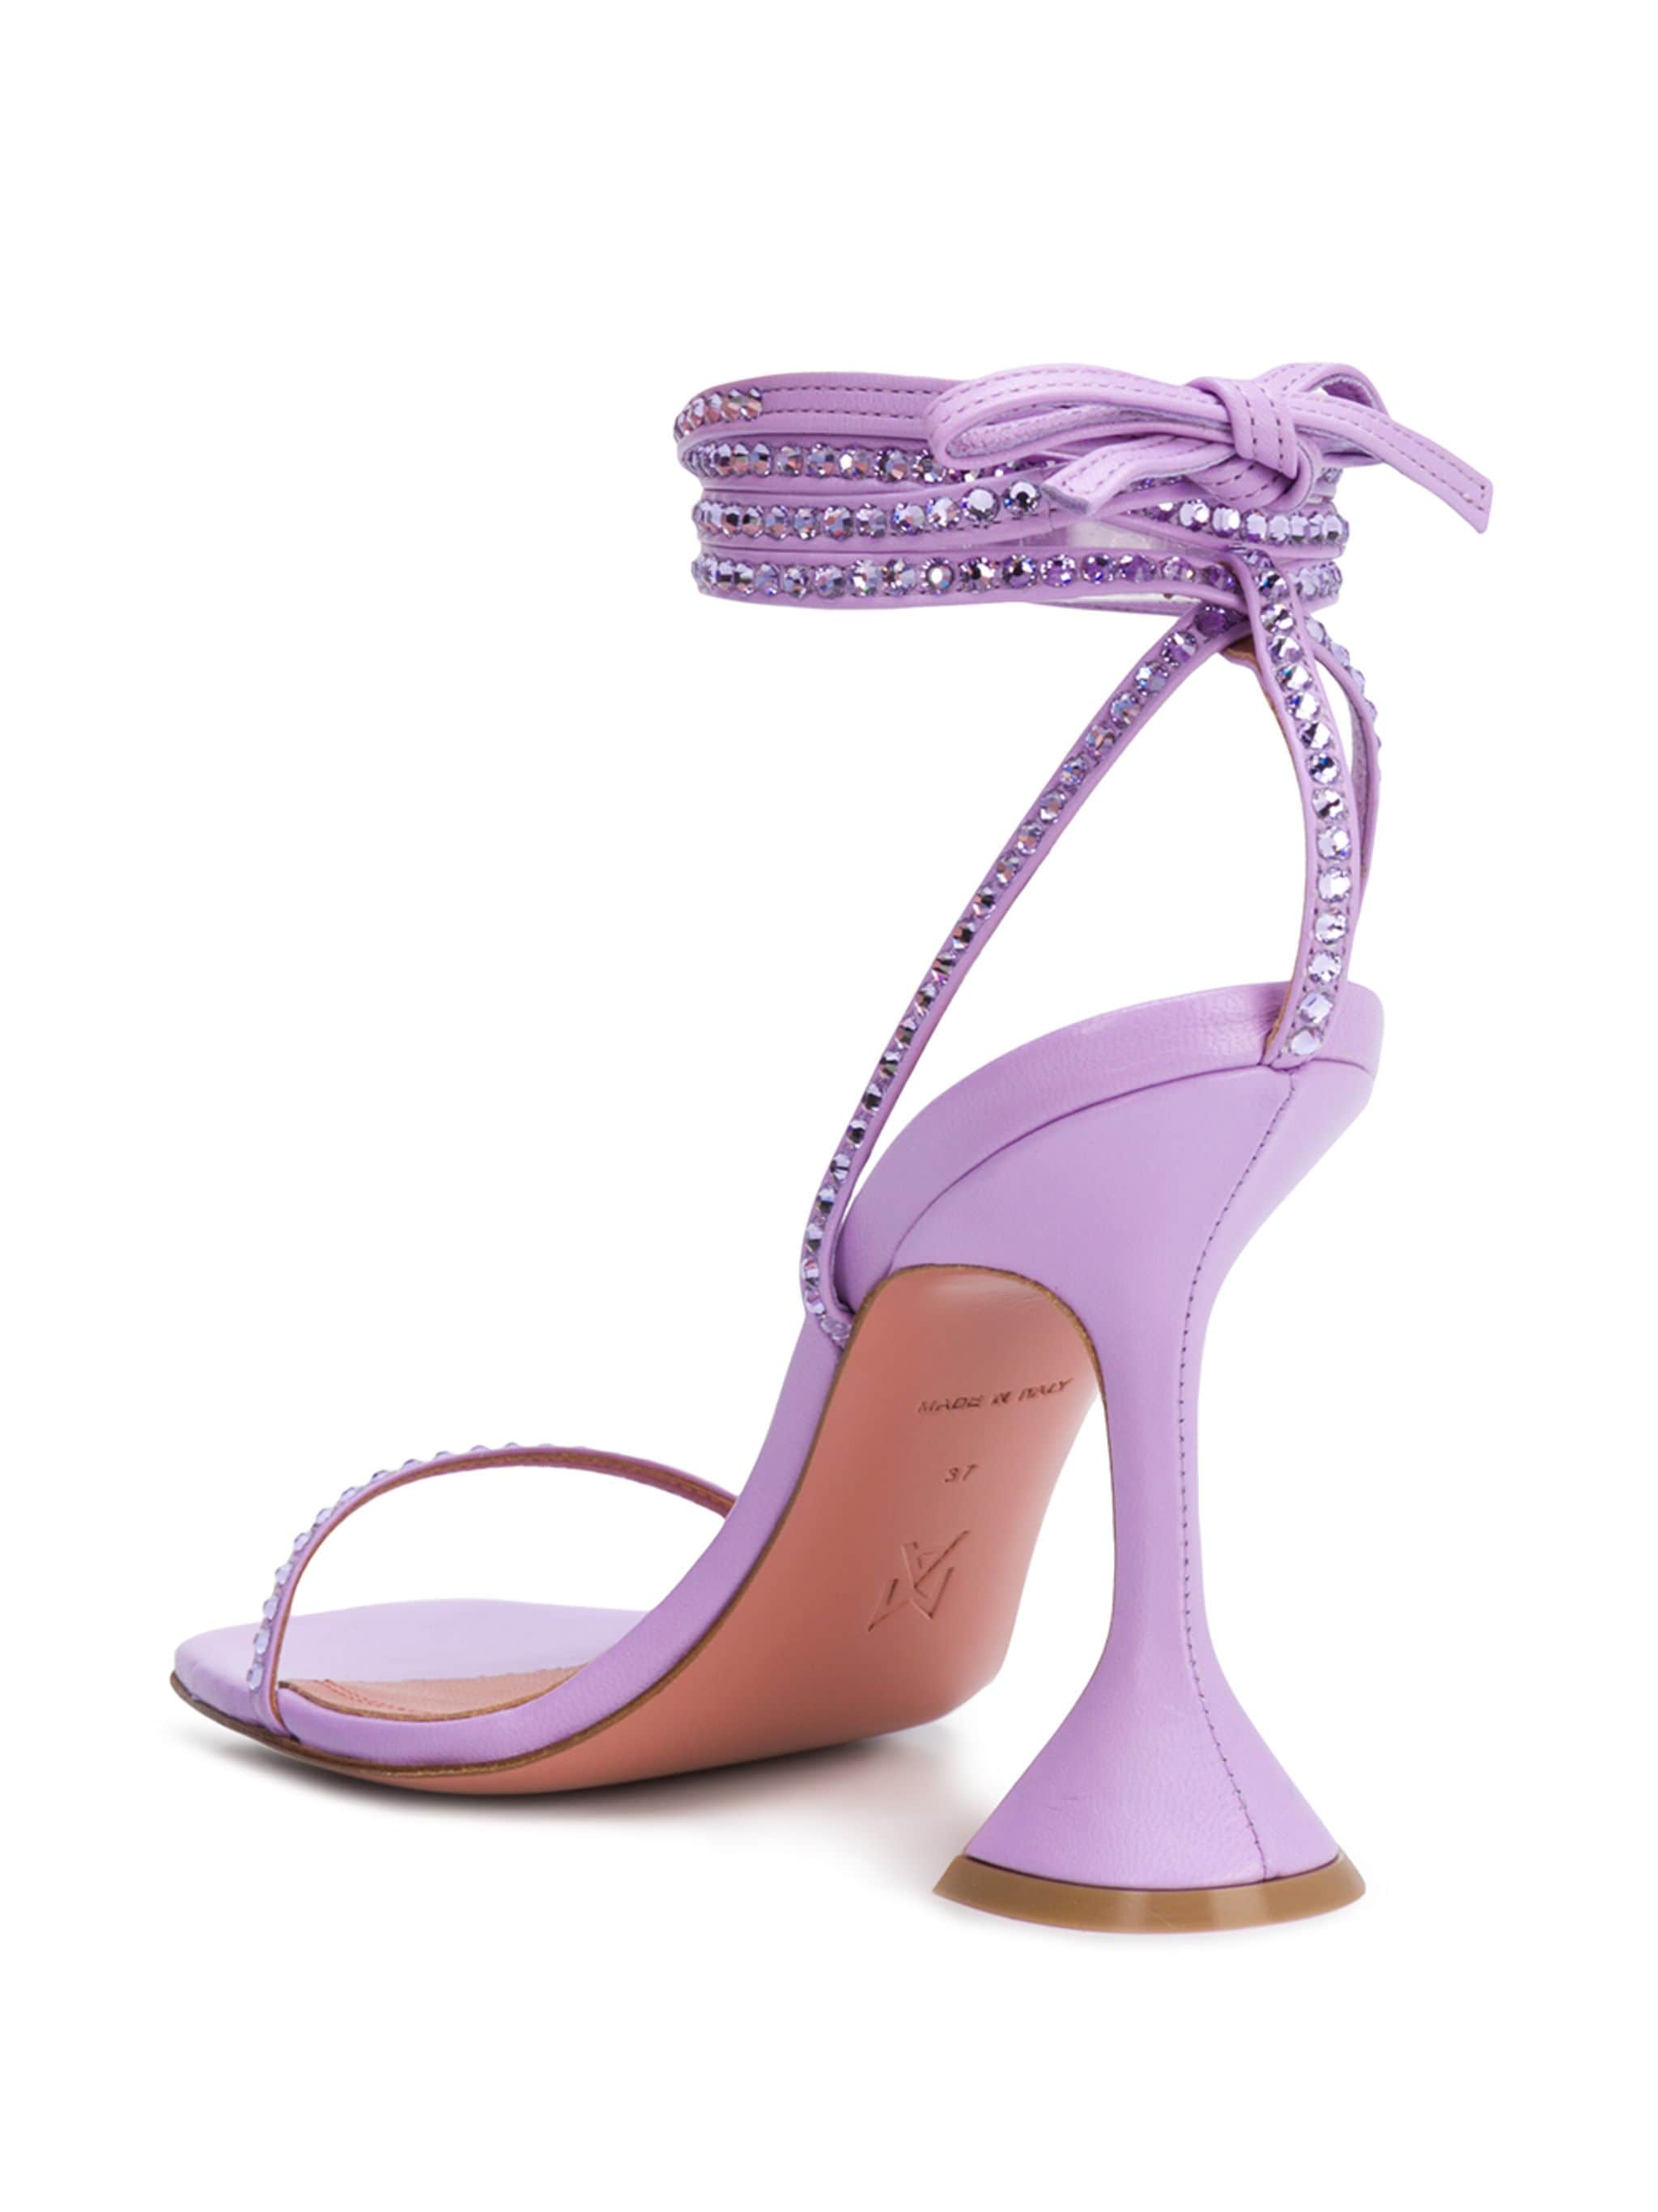 Vita crystal sandals | Amina Muaddi | Eraldo.com